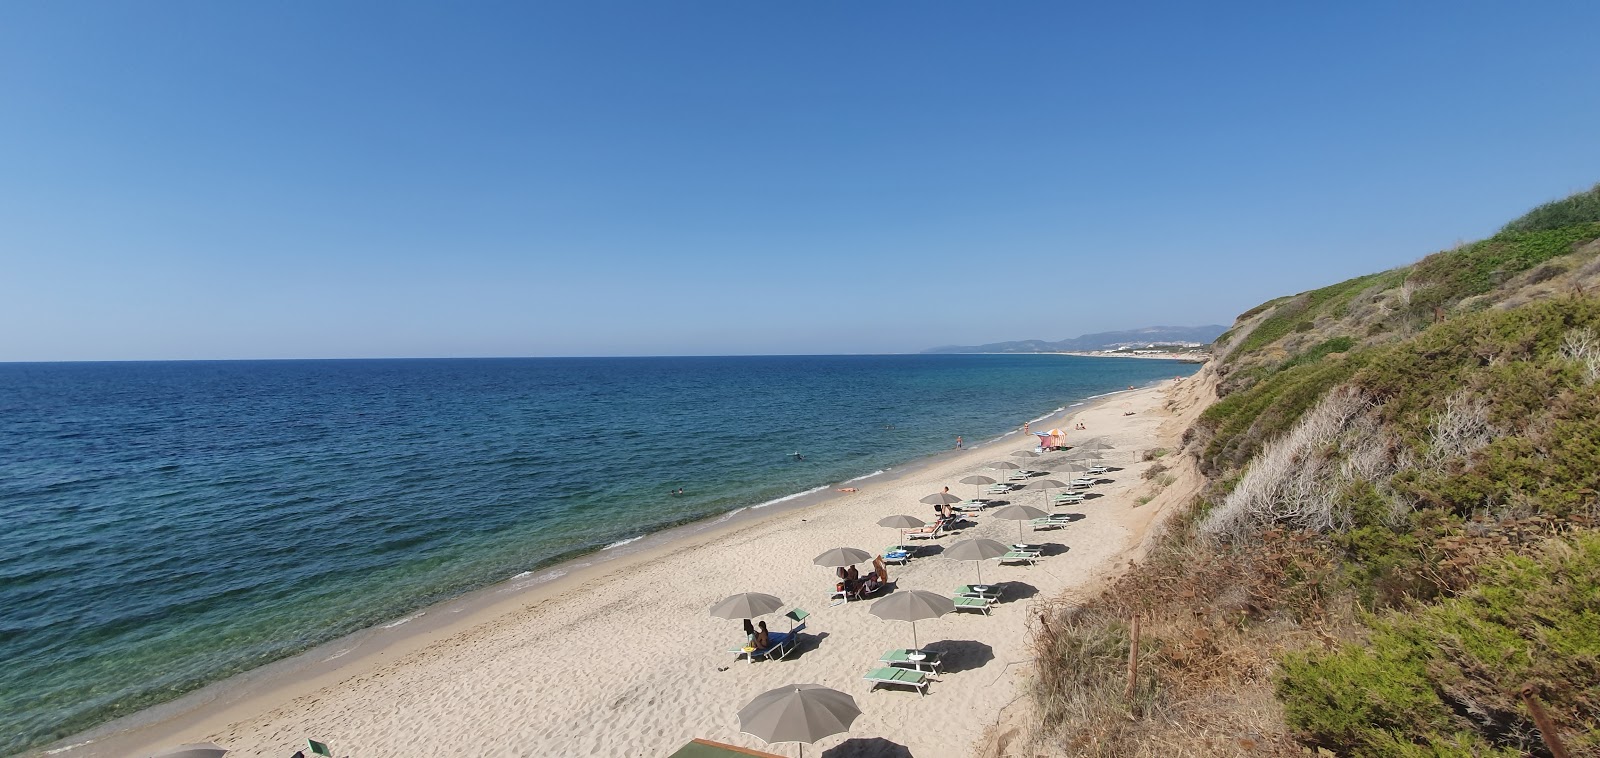 Foto de Spiaggia La Ciaccia com praia espaçosa